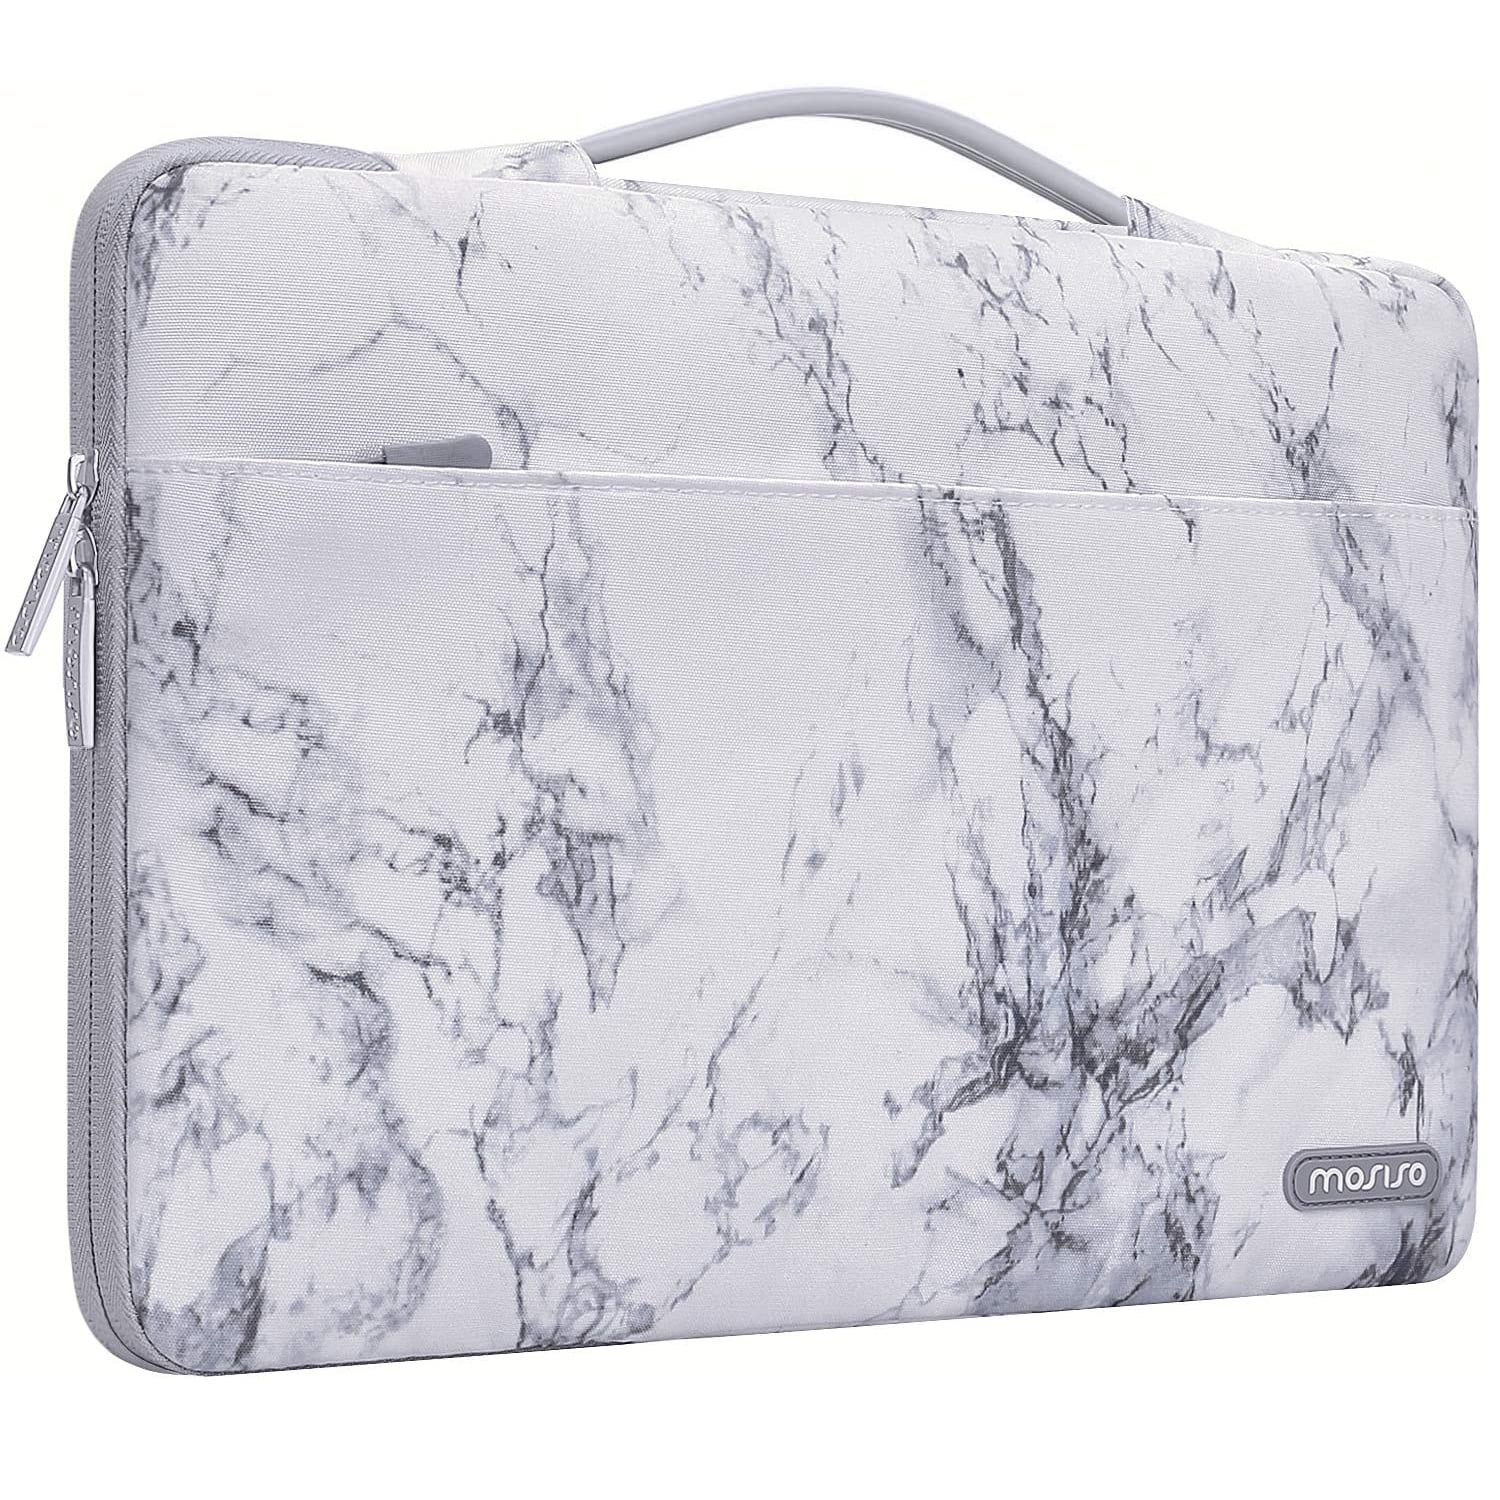 14 Inch Laptop Bag Cute Minnie Mouse Laptop Briefcase Shoulder Messenger Bag Case Sleeve